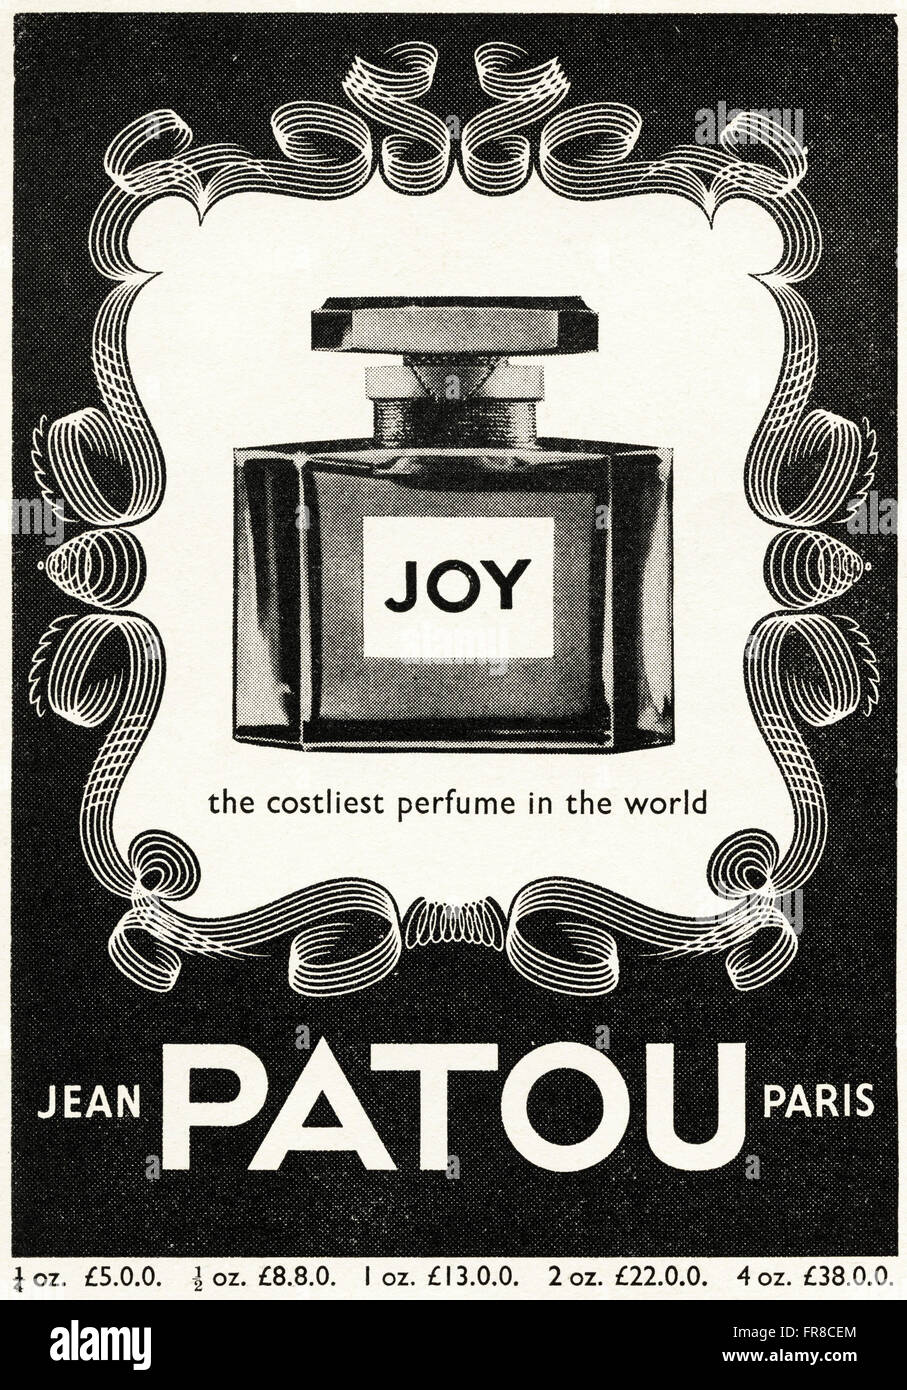 Joy Jean Patou Paris Perfume | peacecommission.kdsg.gov.ng